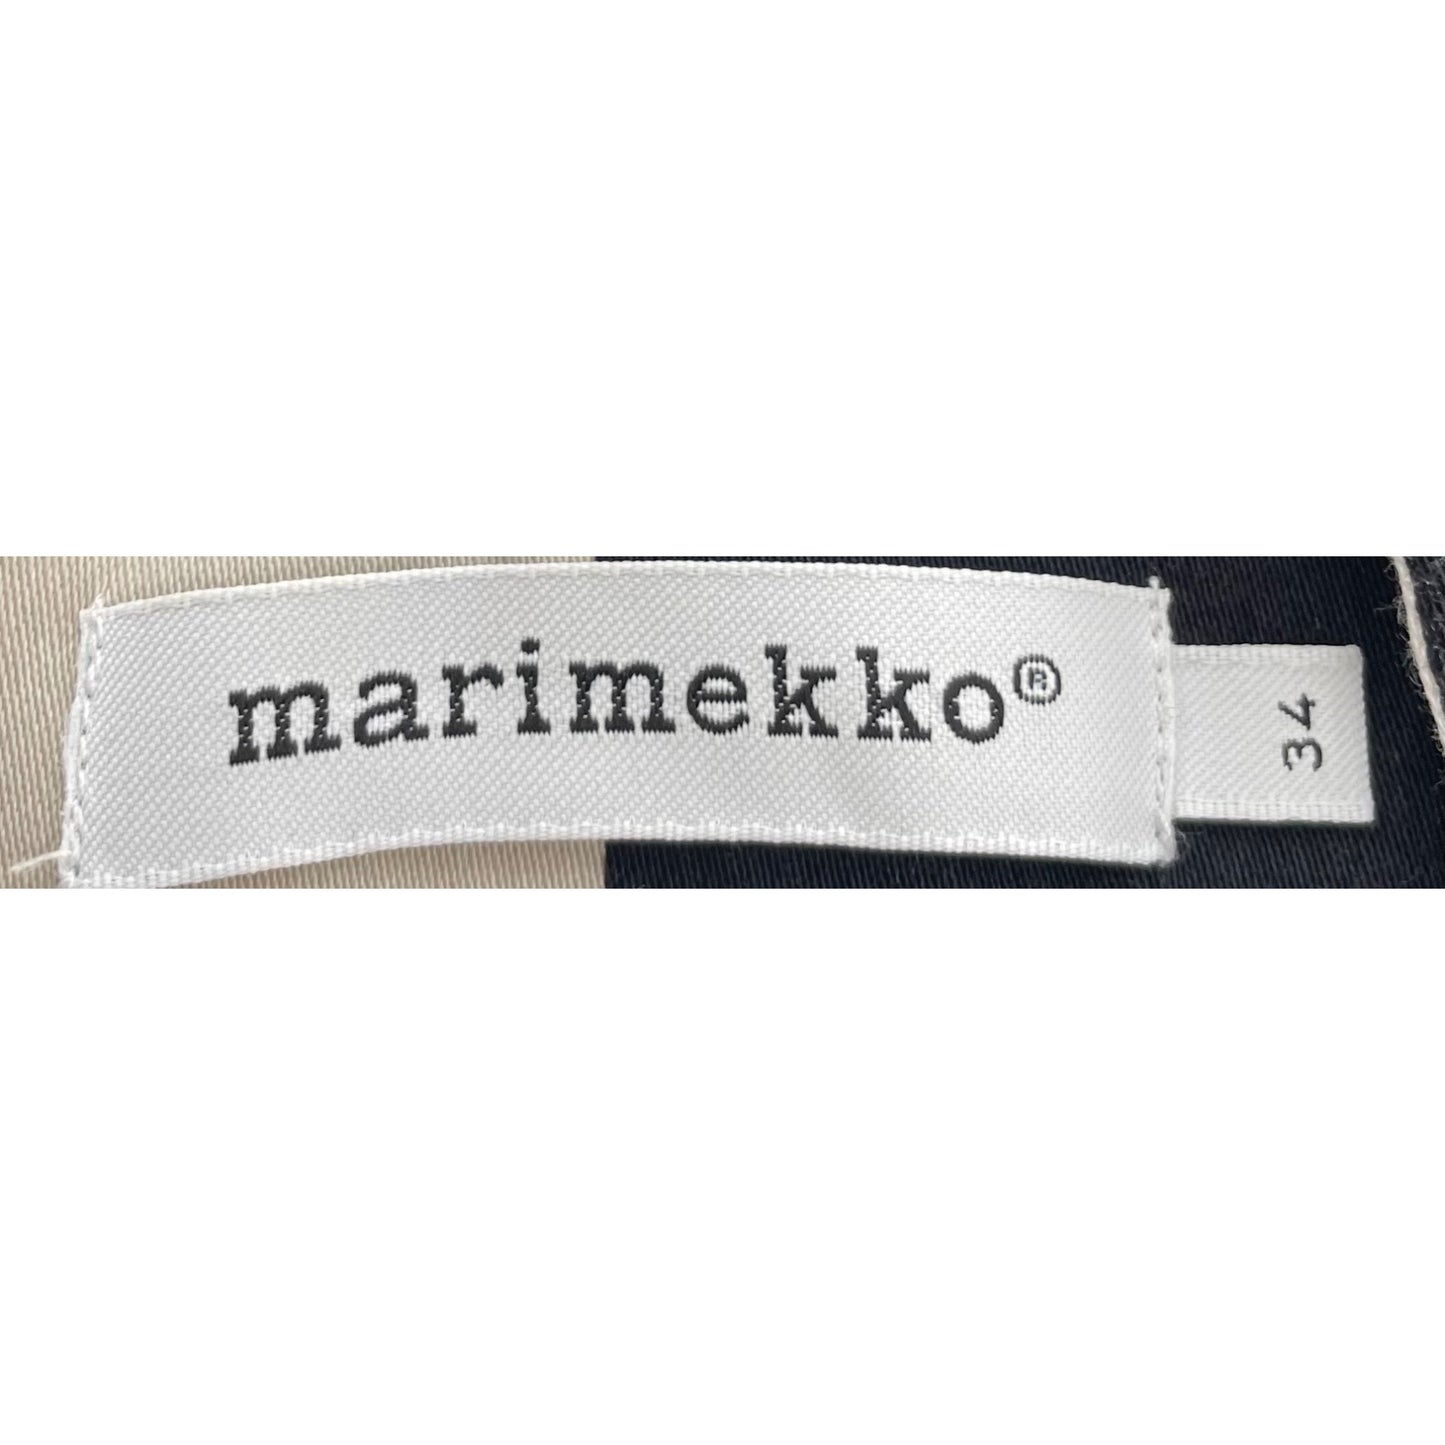 Marimekko Women's Size XS (34) Black, Tan & White Sleeveless Sheath Dress